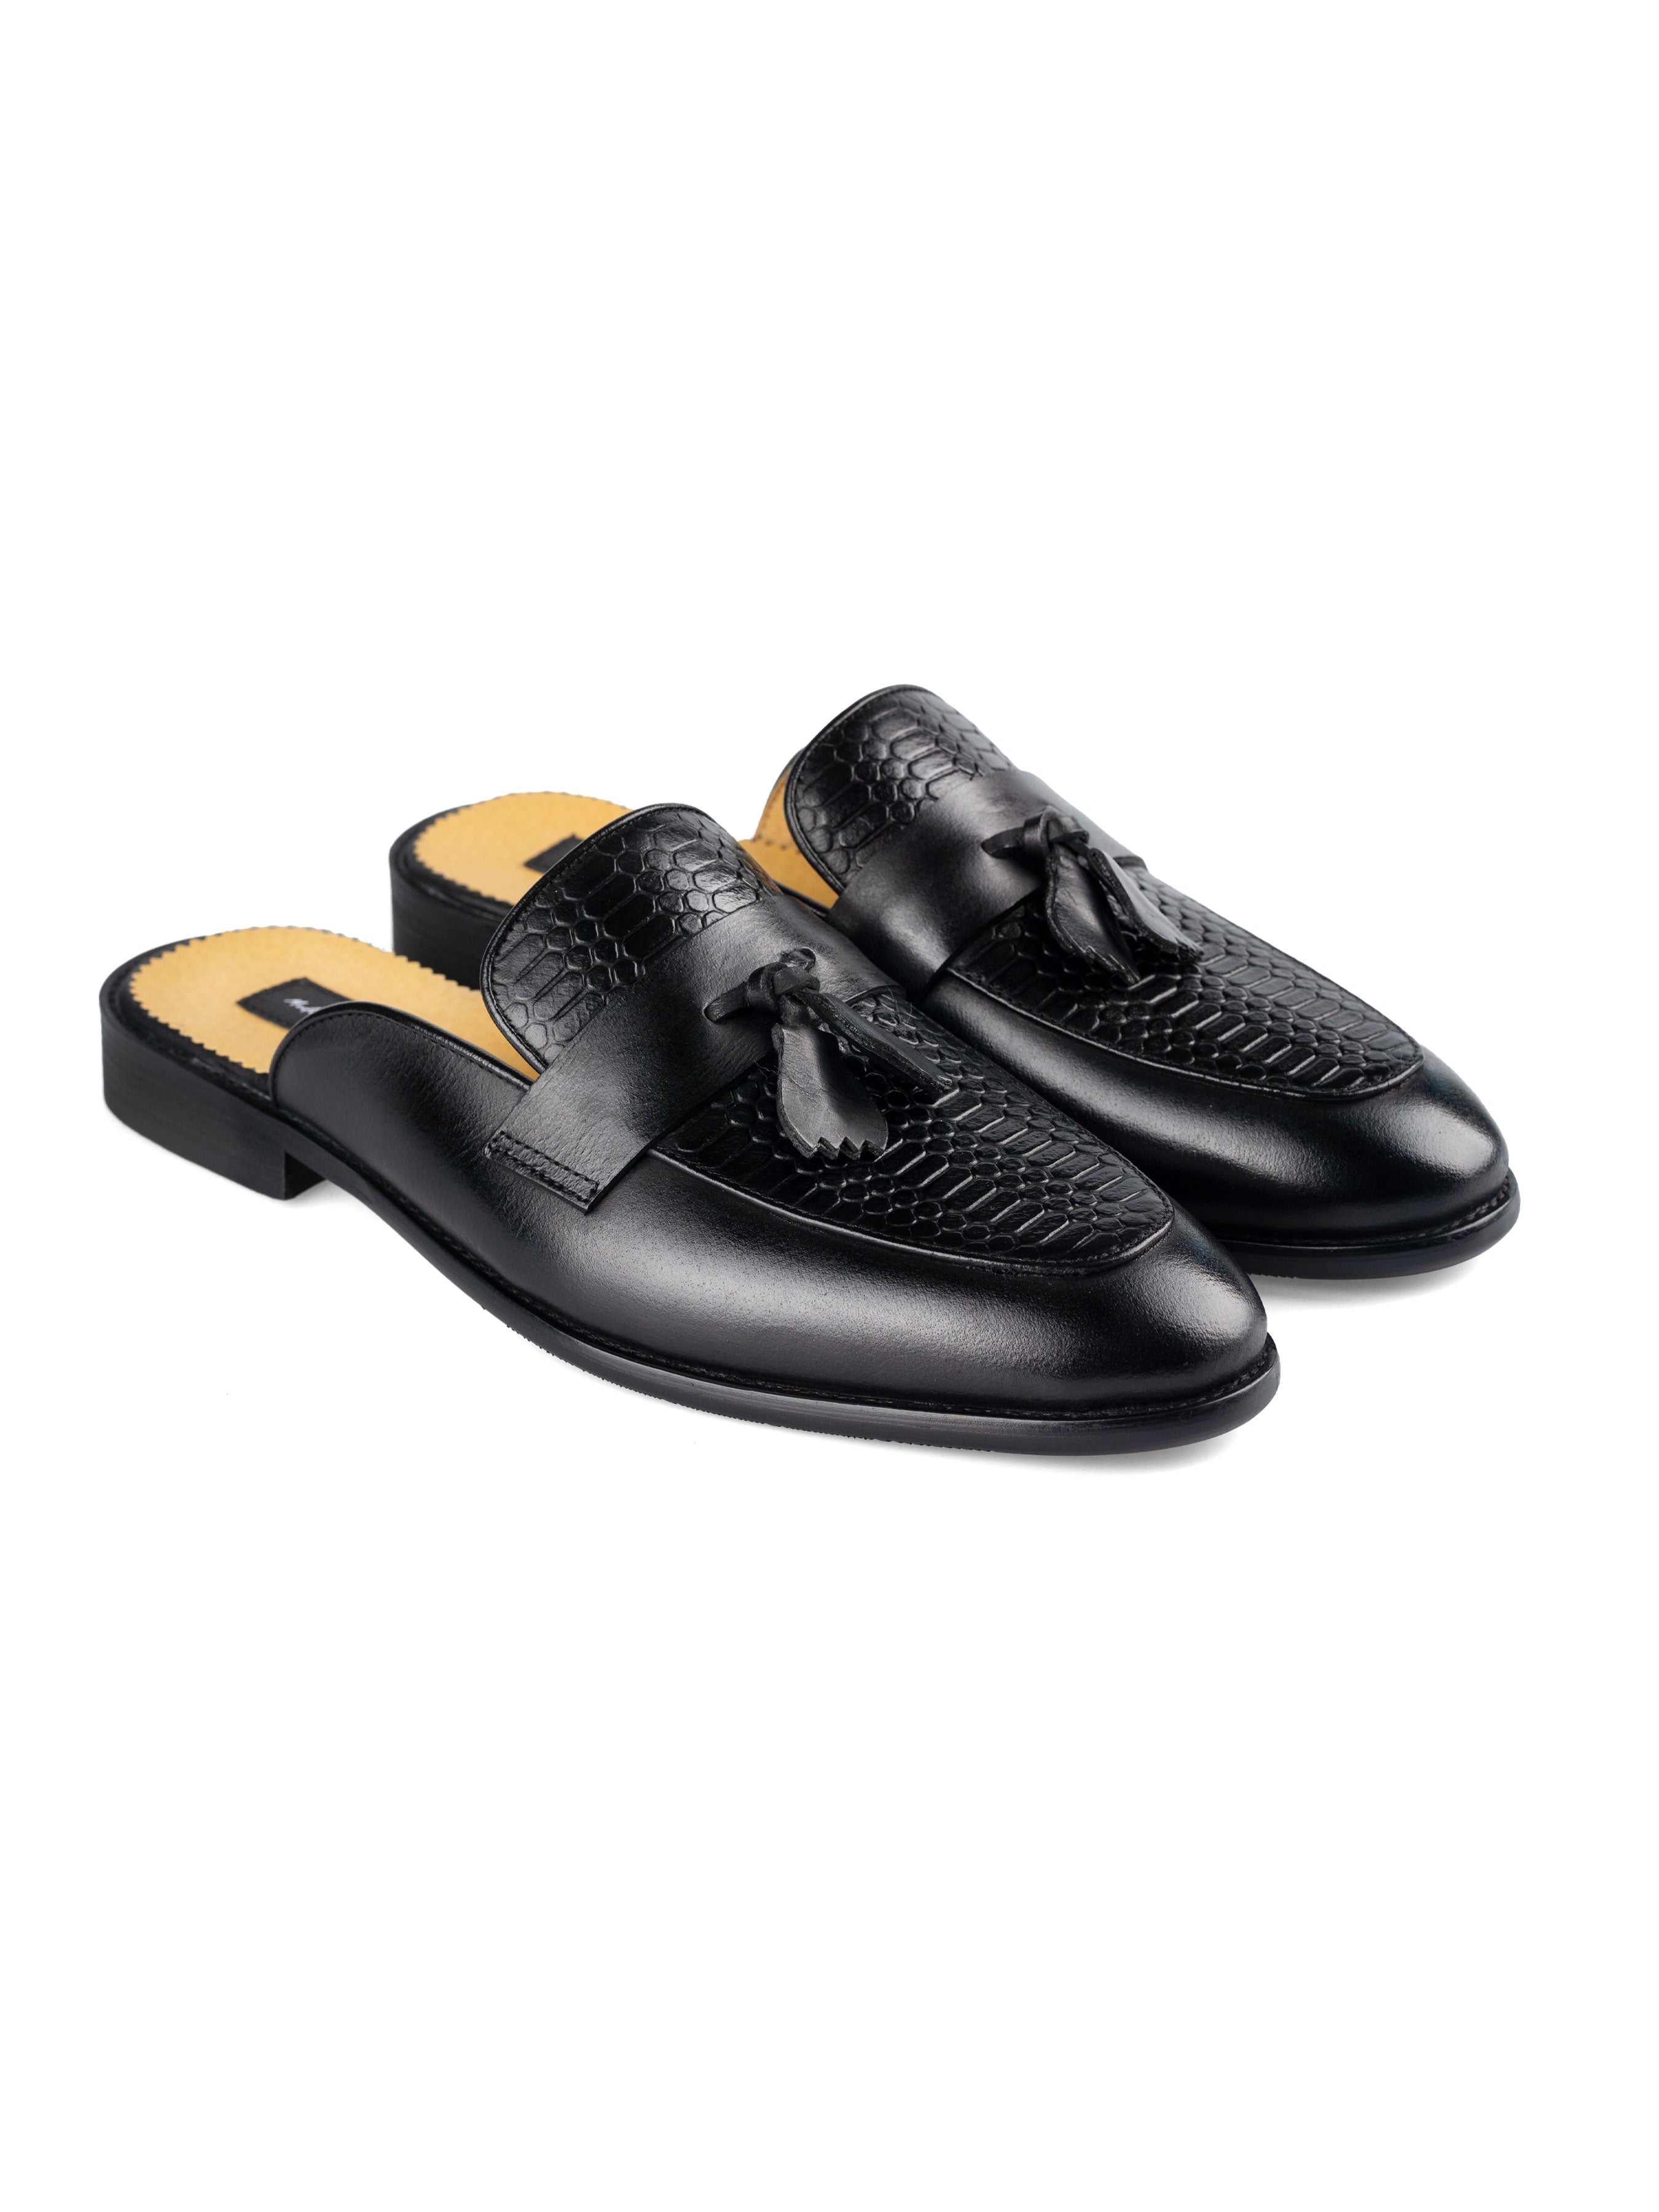 Mules Belgian Tassel - Black Phyton Leather - Zeve Shoes